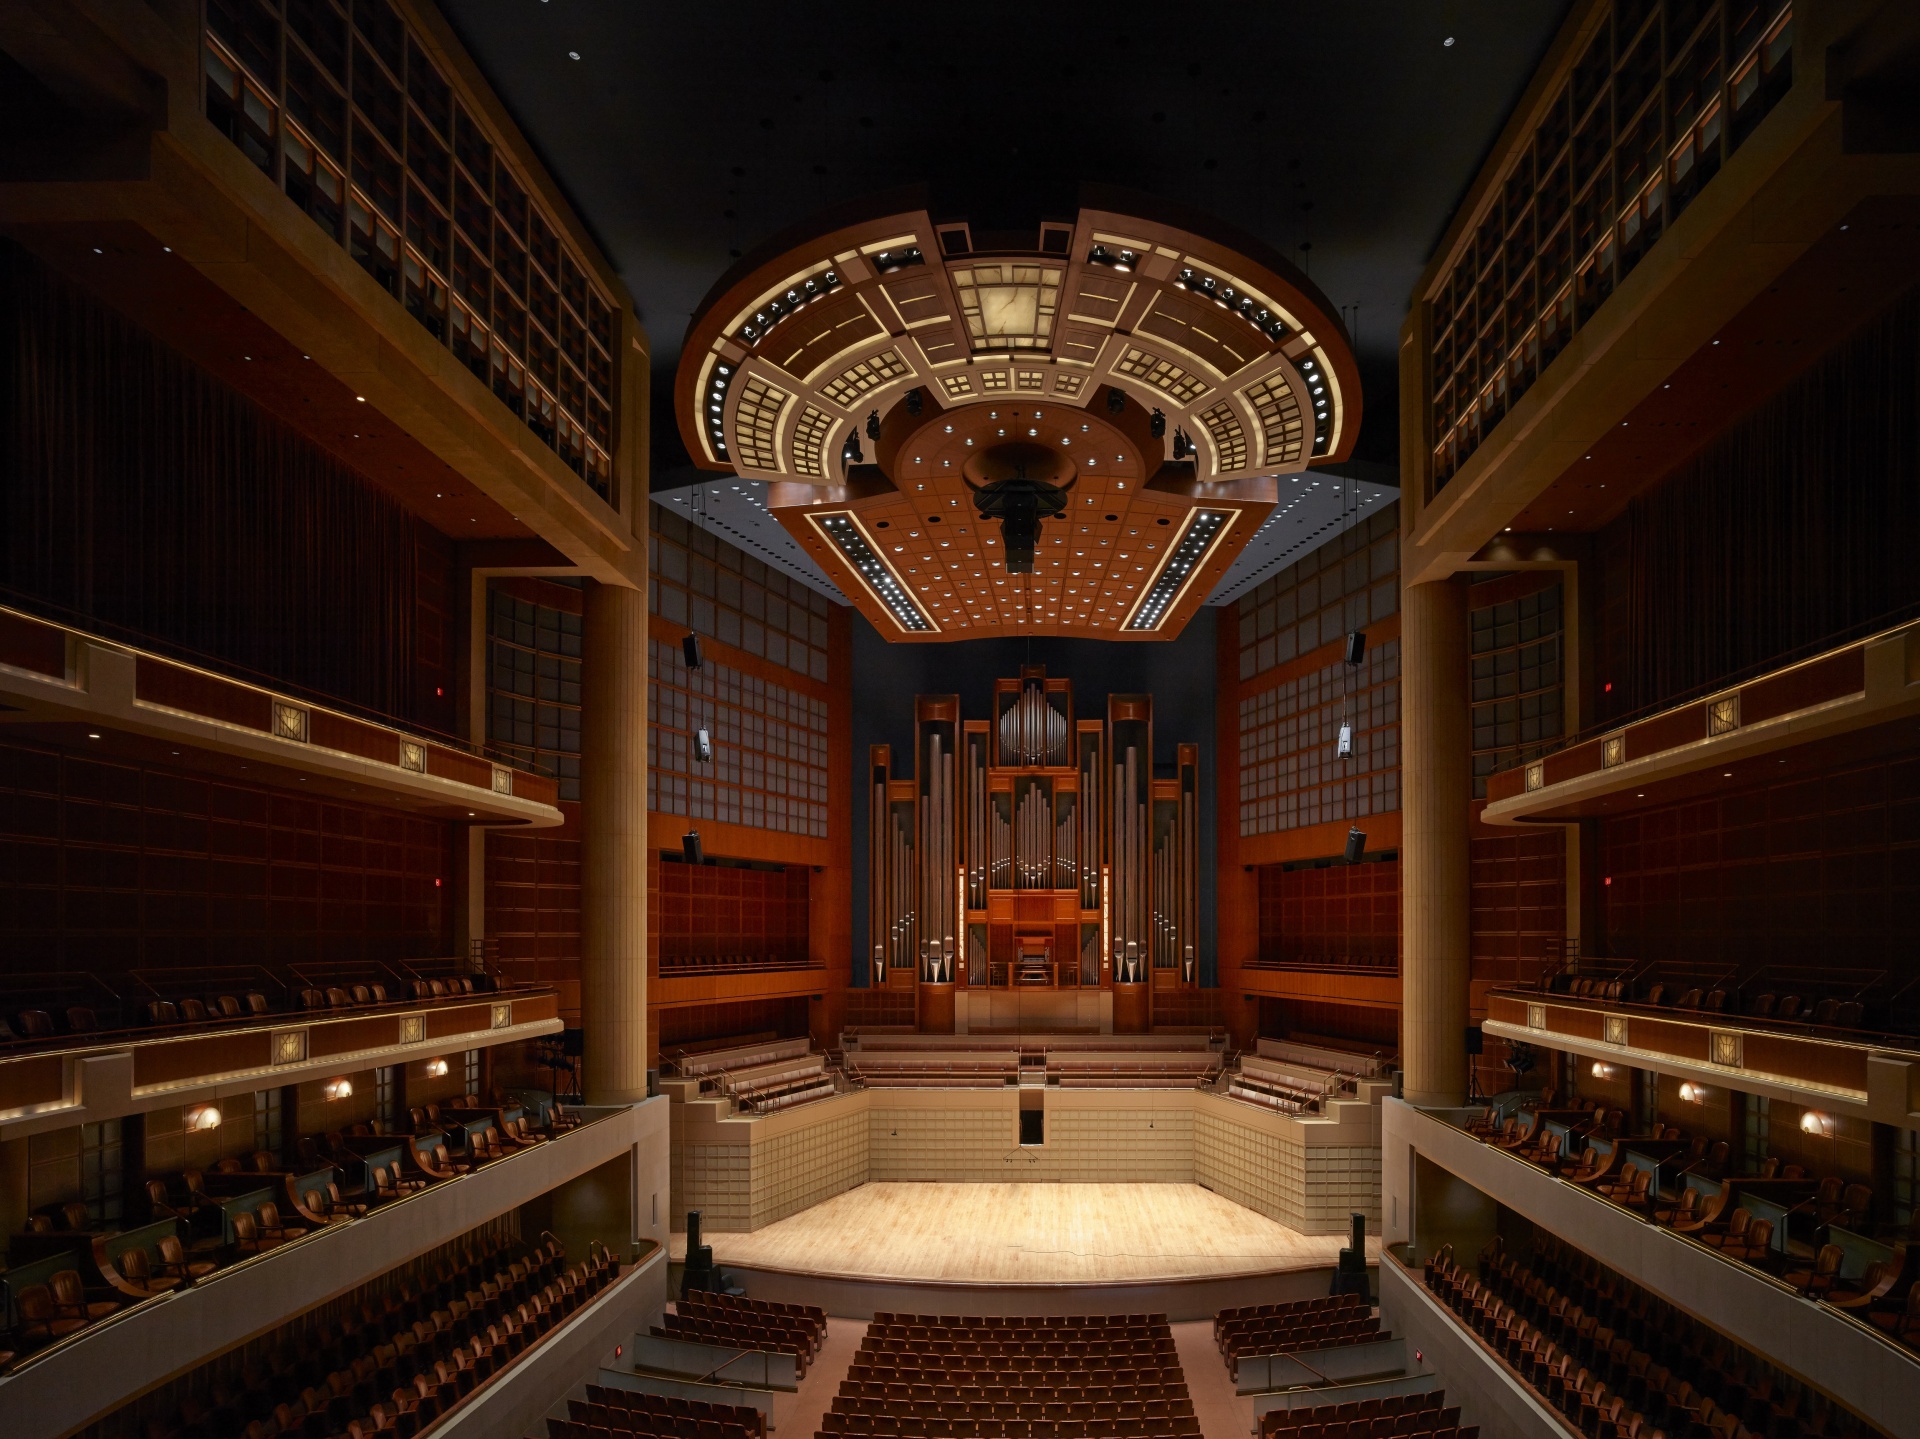 Myerson Symphony Hall Auditorium